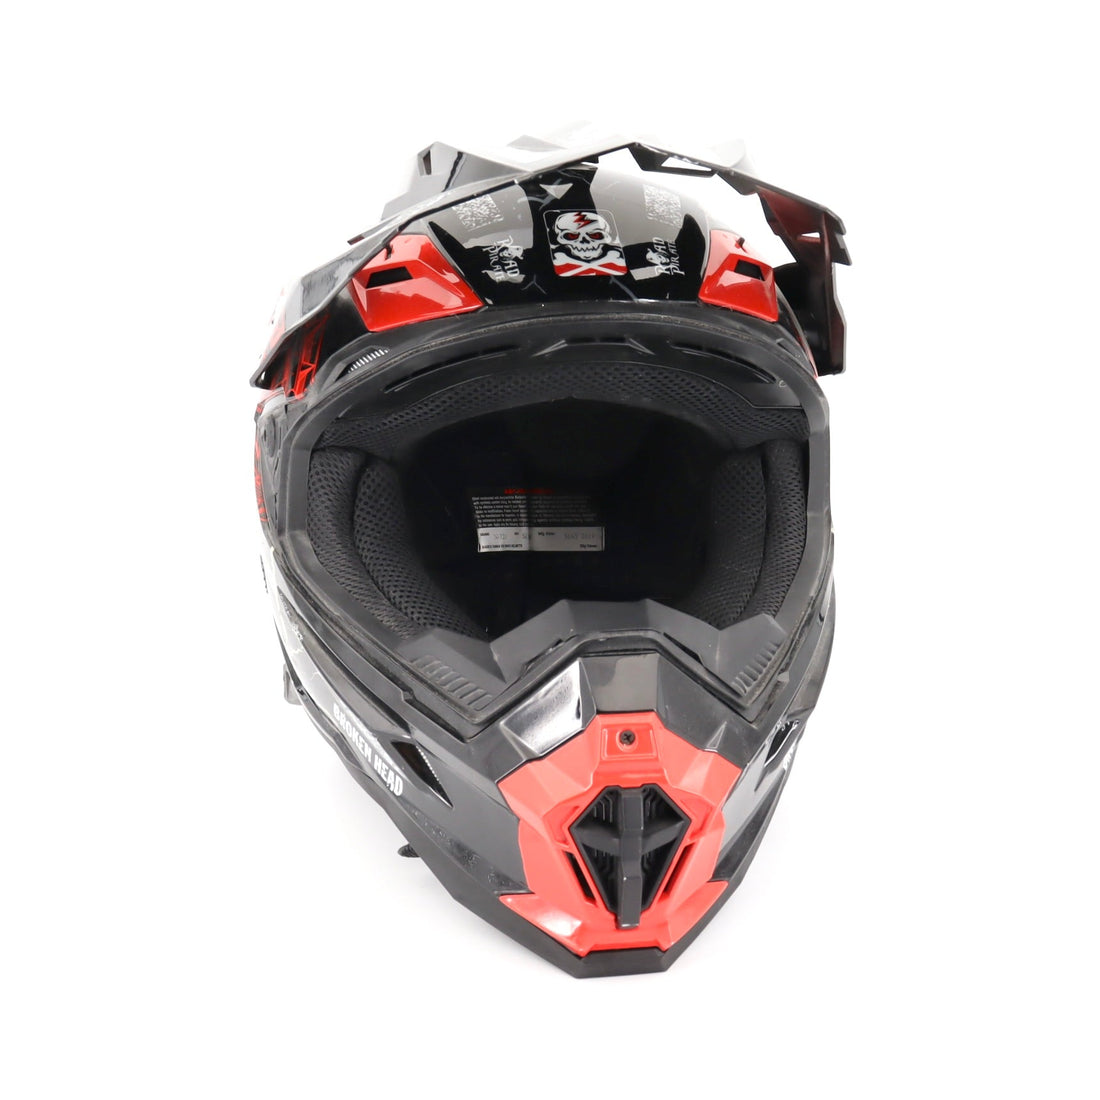 Motorcross-Helm - Broken Head Cross - 55-56 - rot/schwarz/weiß - Pirat - sehr guter Zustand